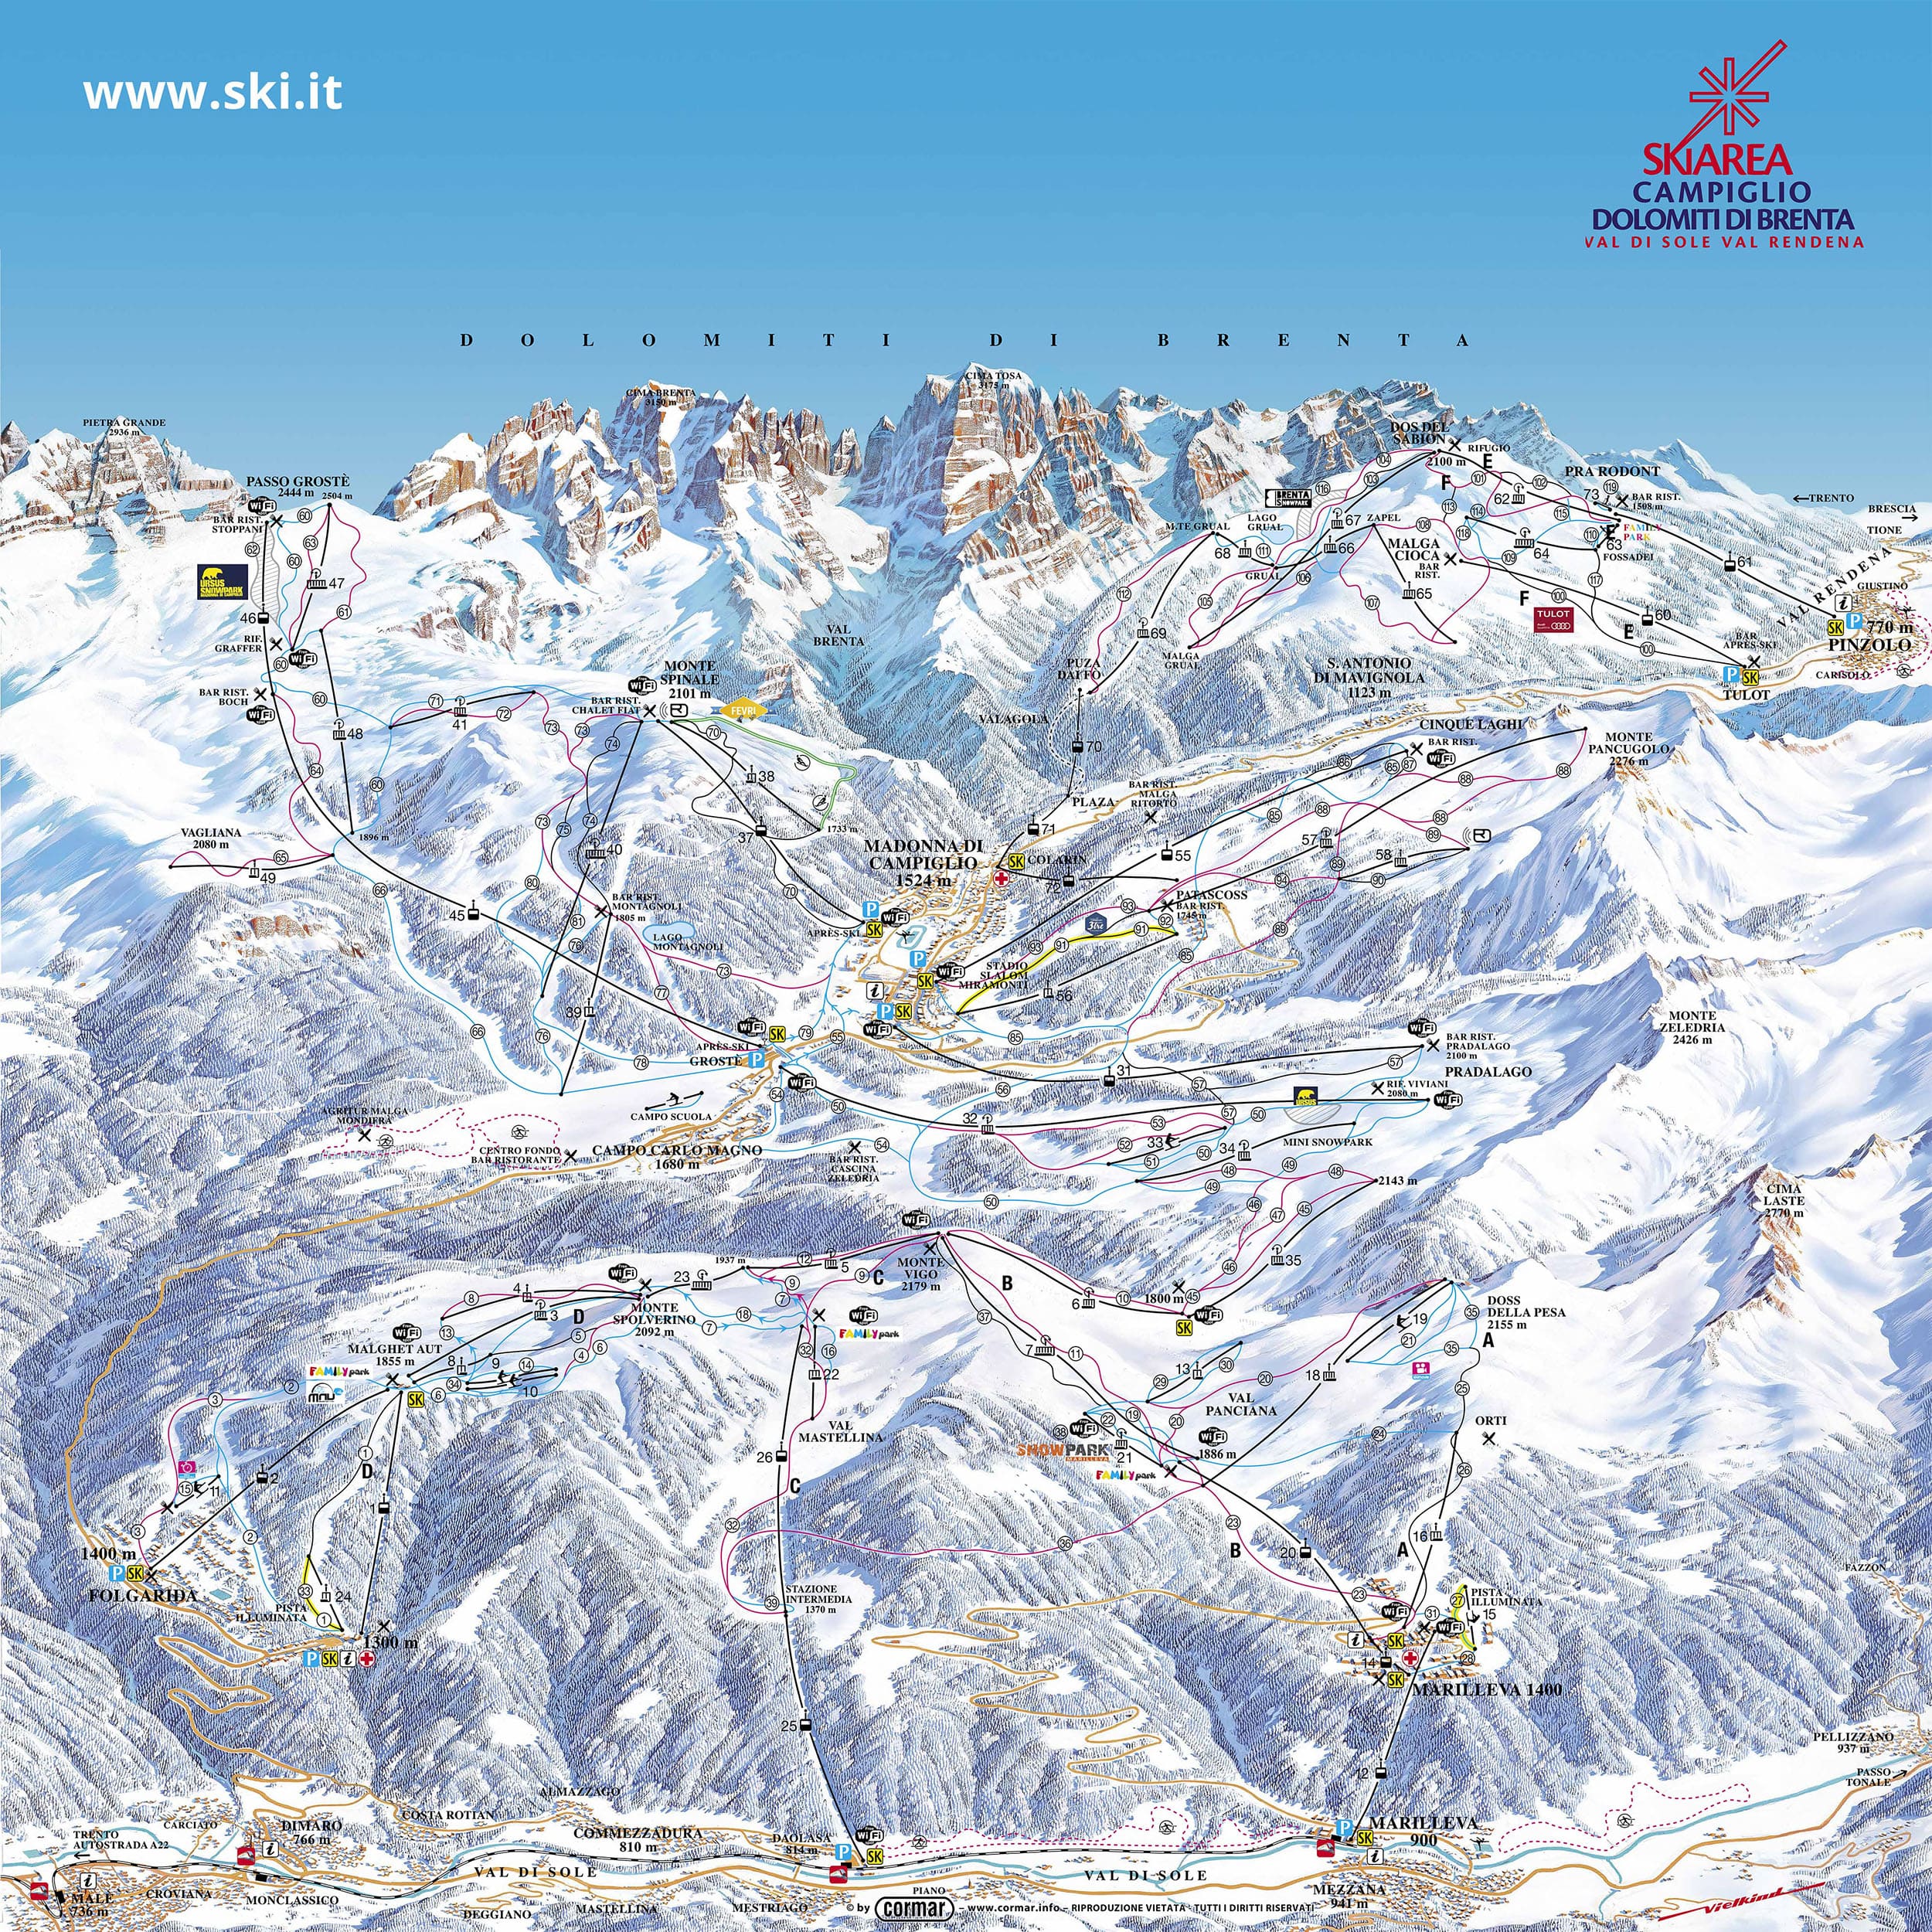 Stacja narciarska - Madonna di Campiglio